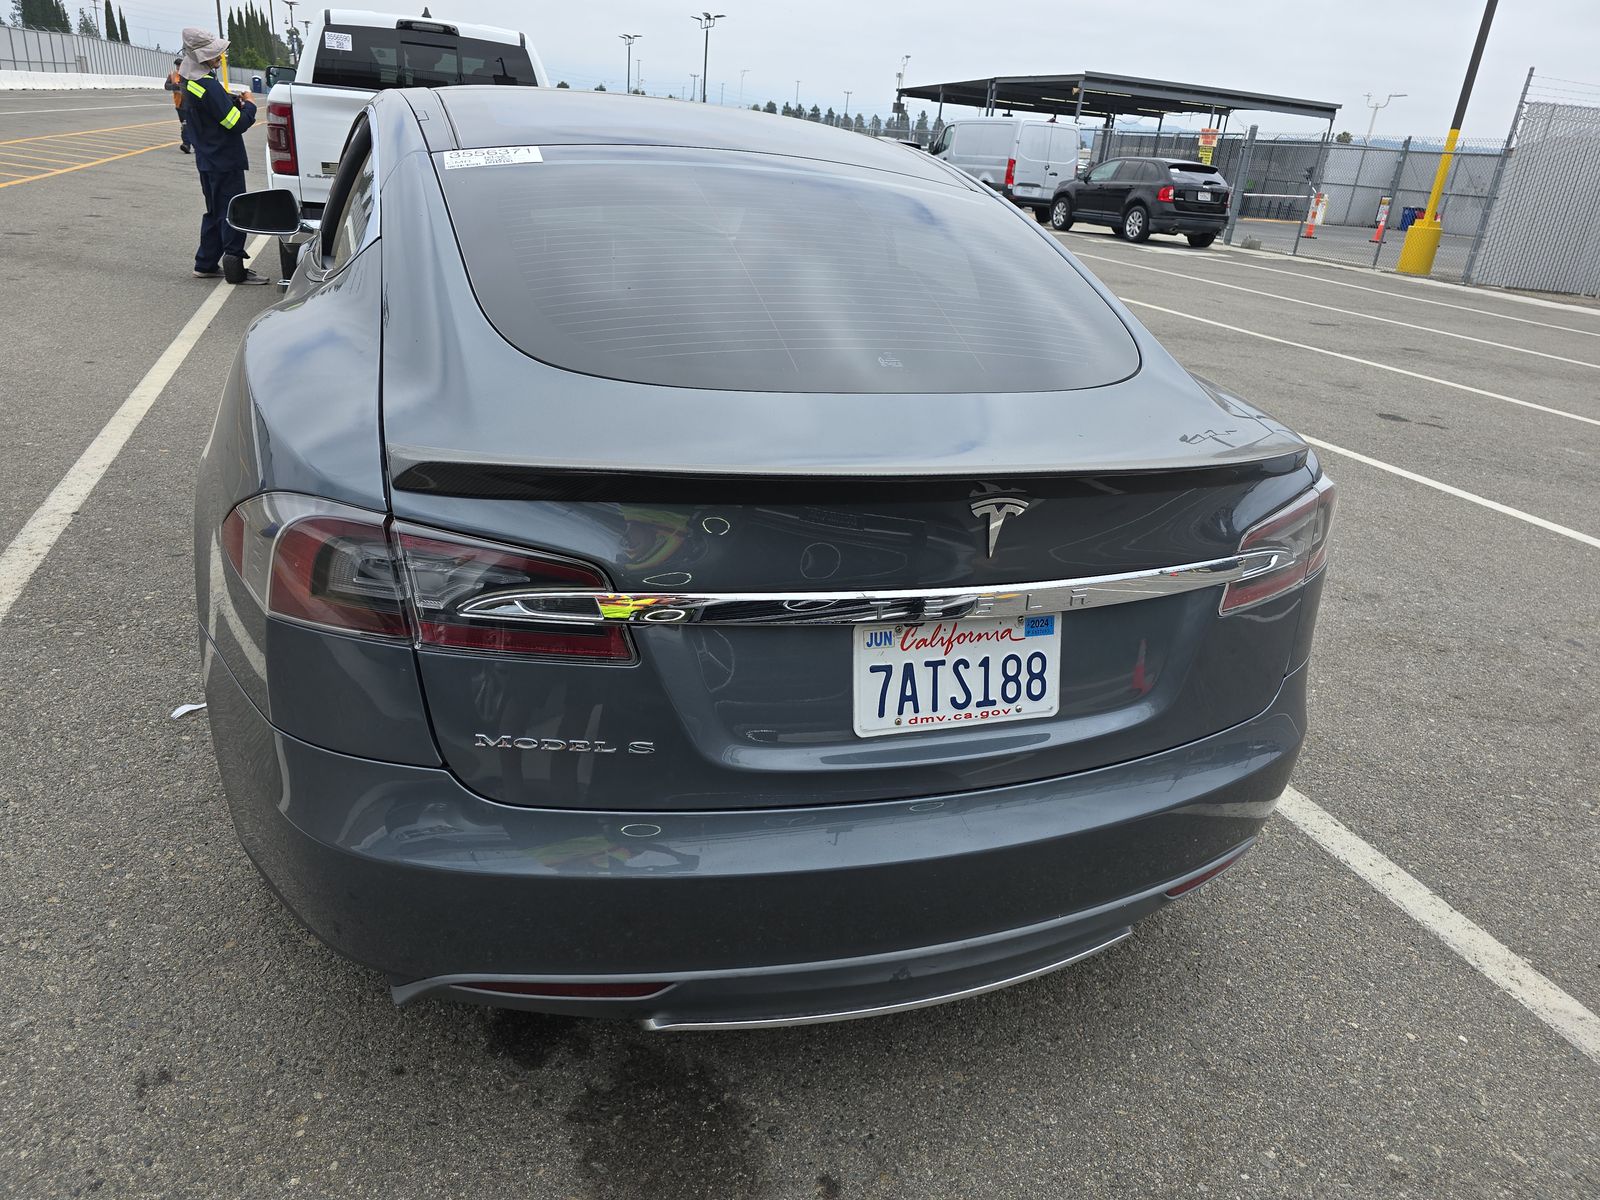 2013 Tesla Model S Performance RWD